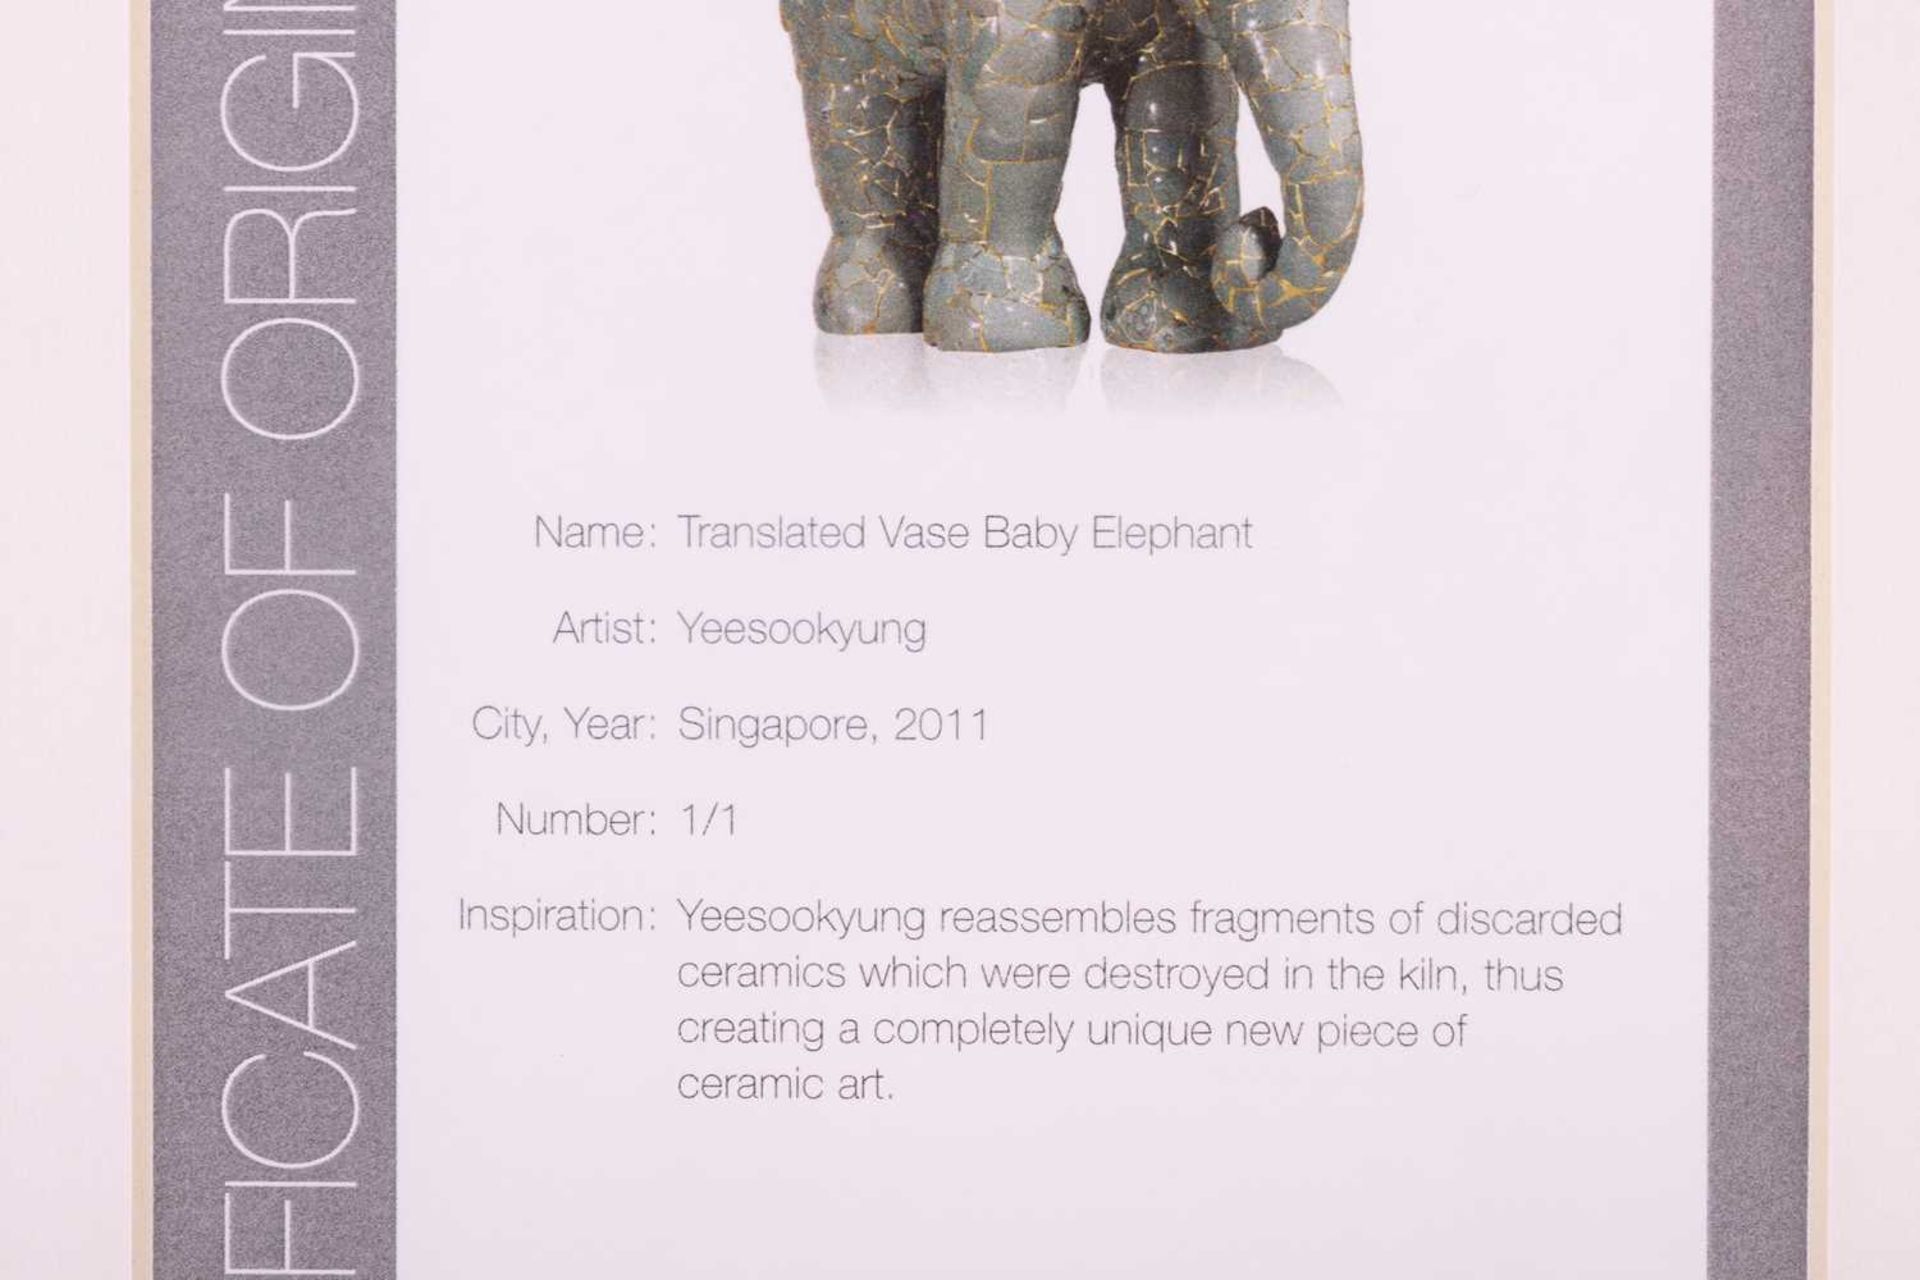 Yeesookyung (b. 1963) South Korean, 'Translated Vase Baby Elephant' (2012), celadon ceramic pieces f - Image 11 of 16